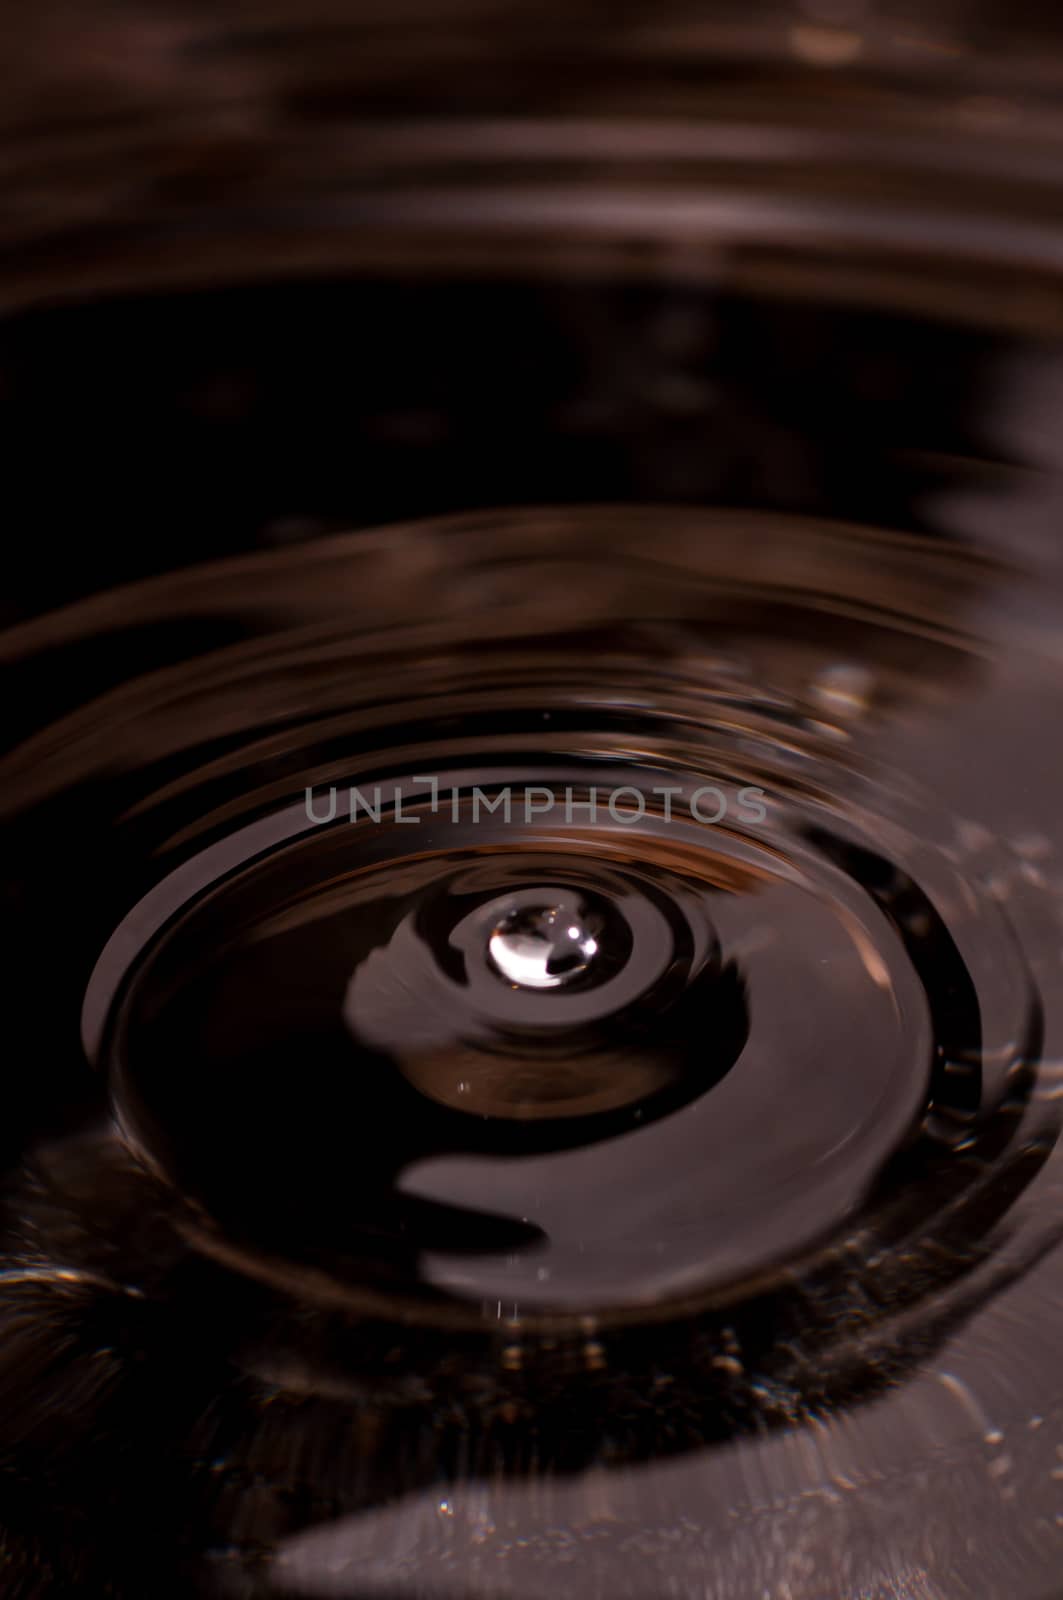 Water ripple inside of a black pan